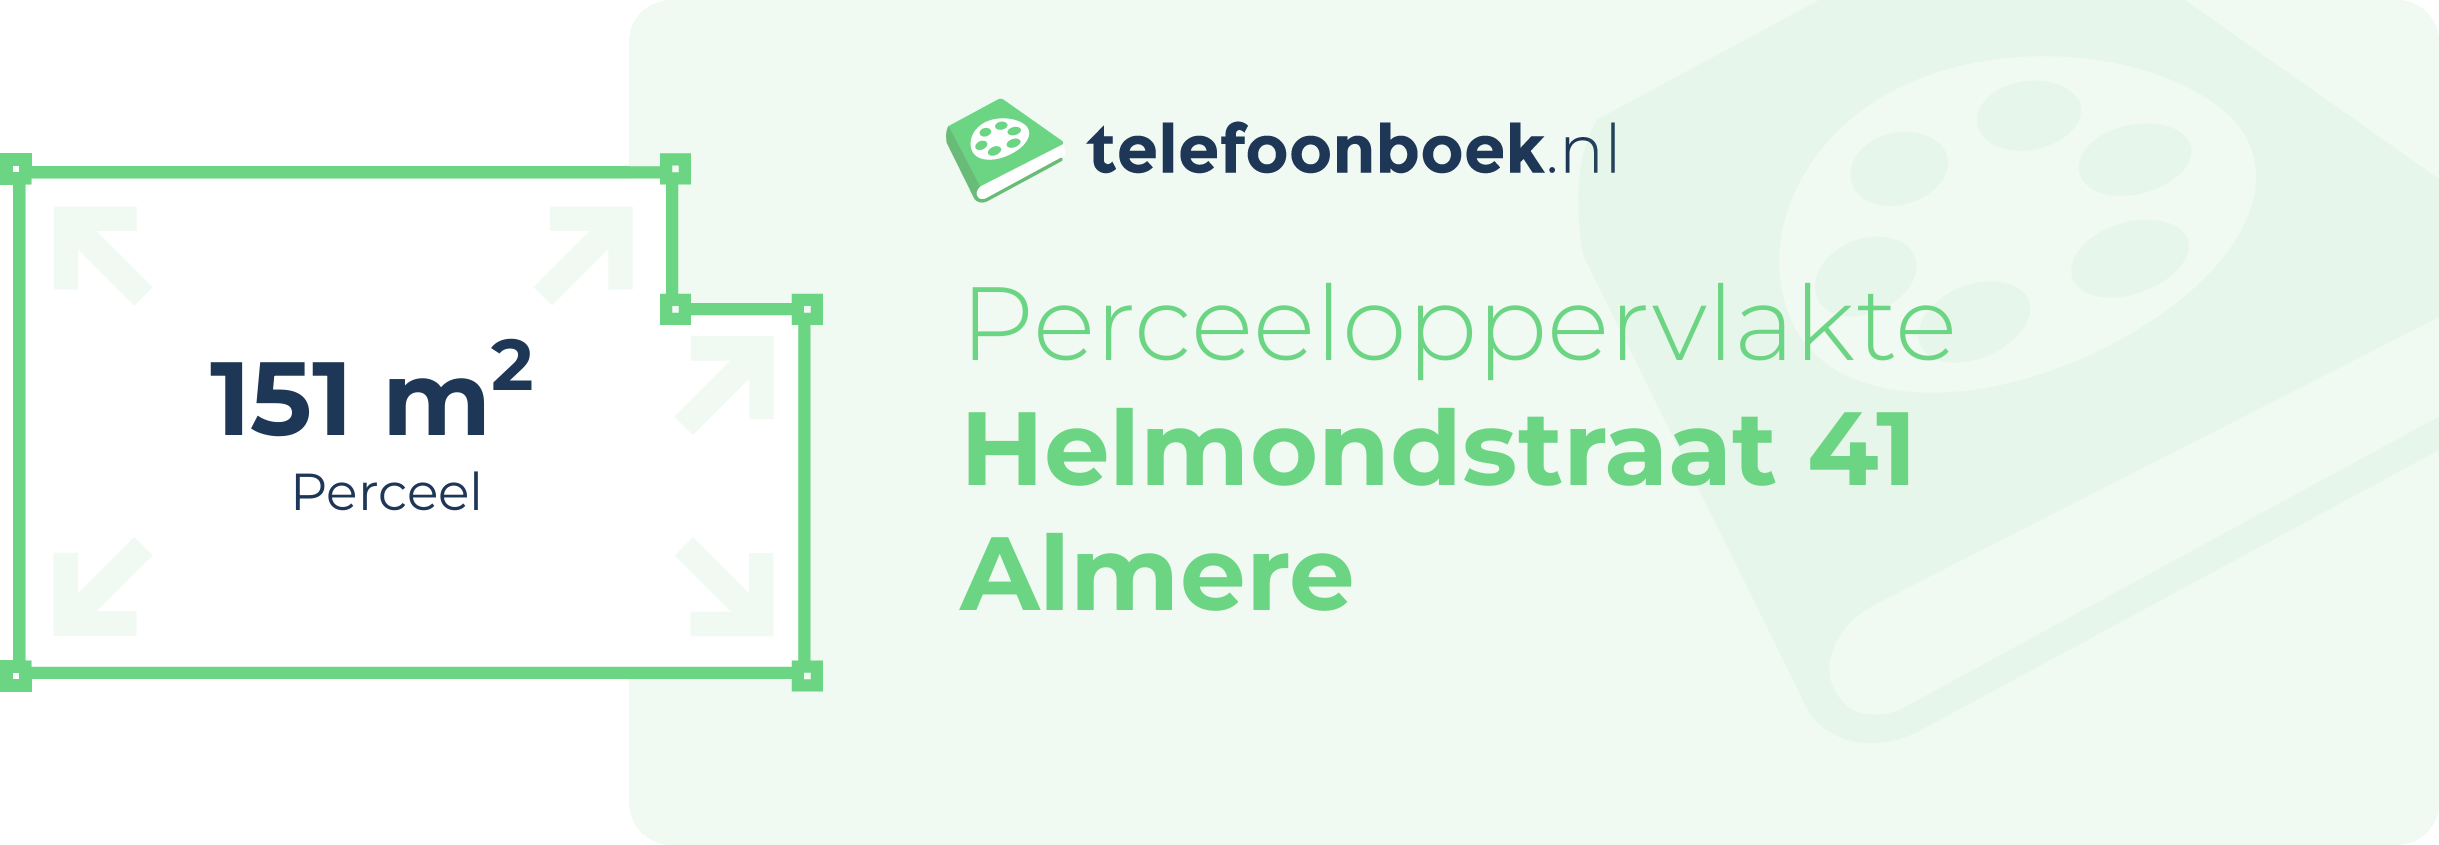 Perceeloppervlakte Helmondstraat 41 Almere